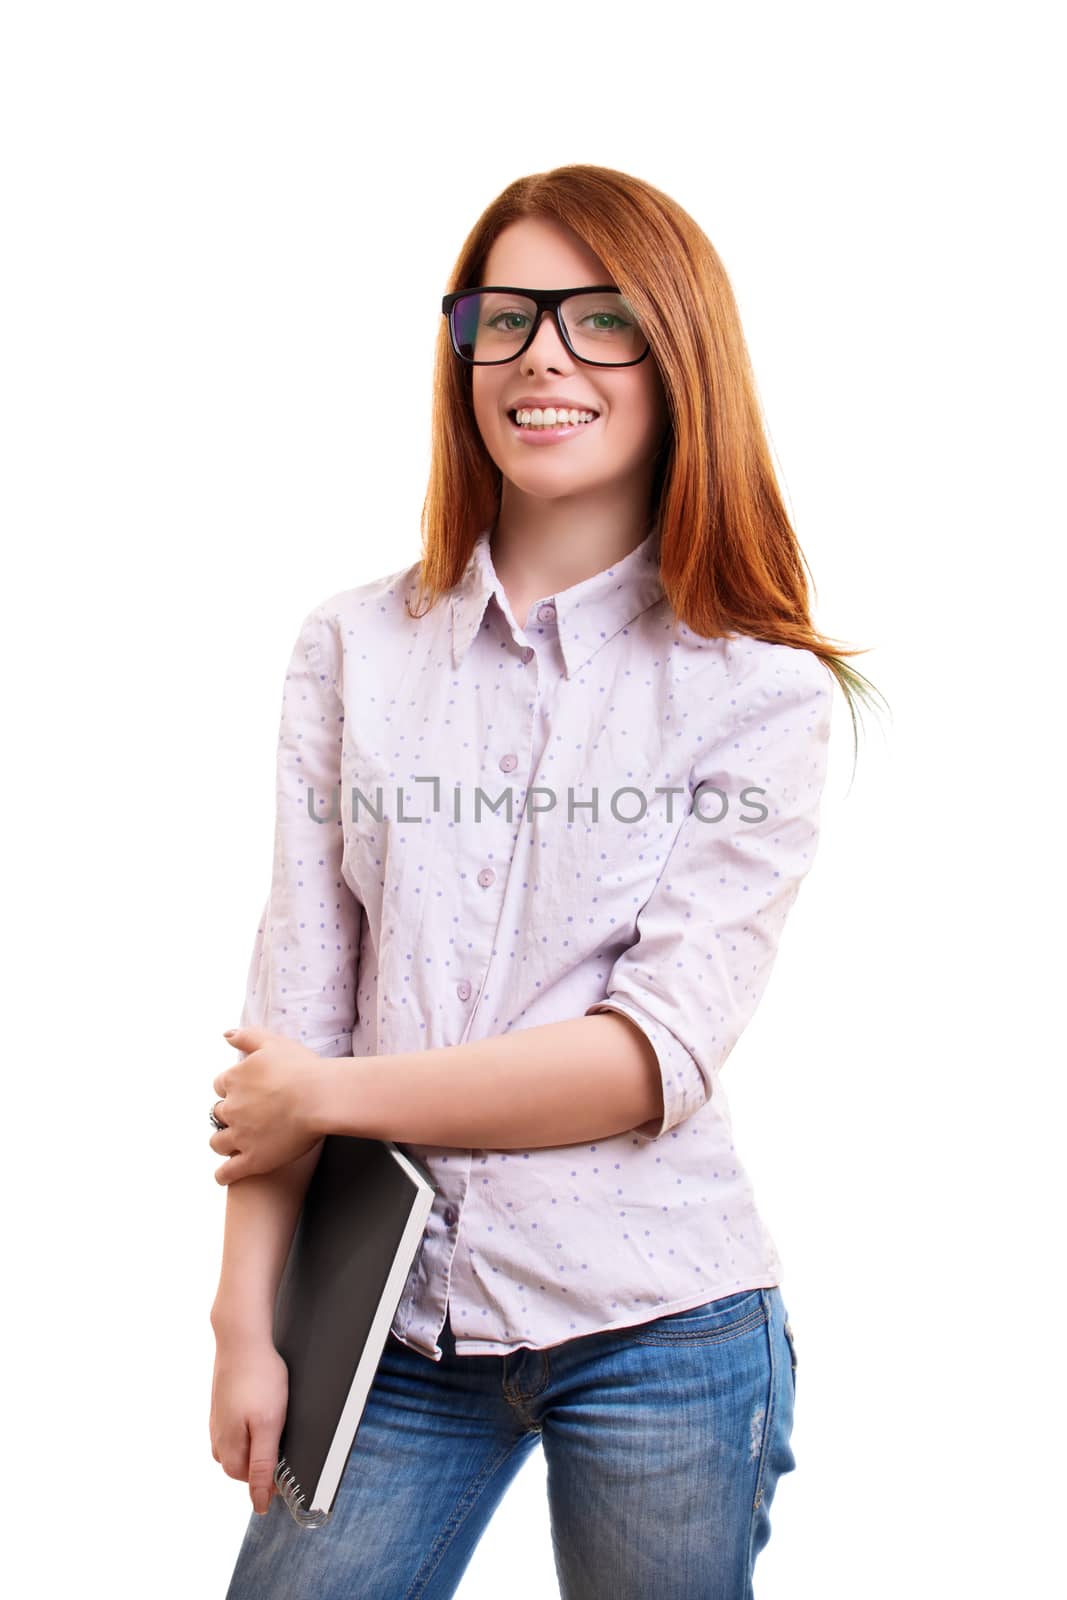 Cute nerd girl by Mendelex